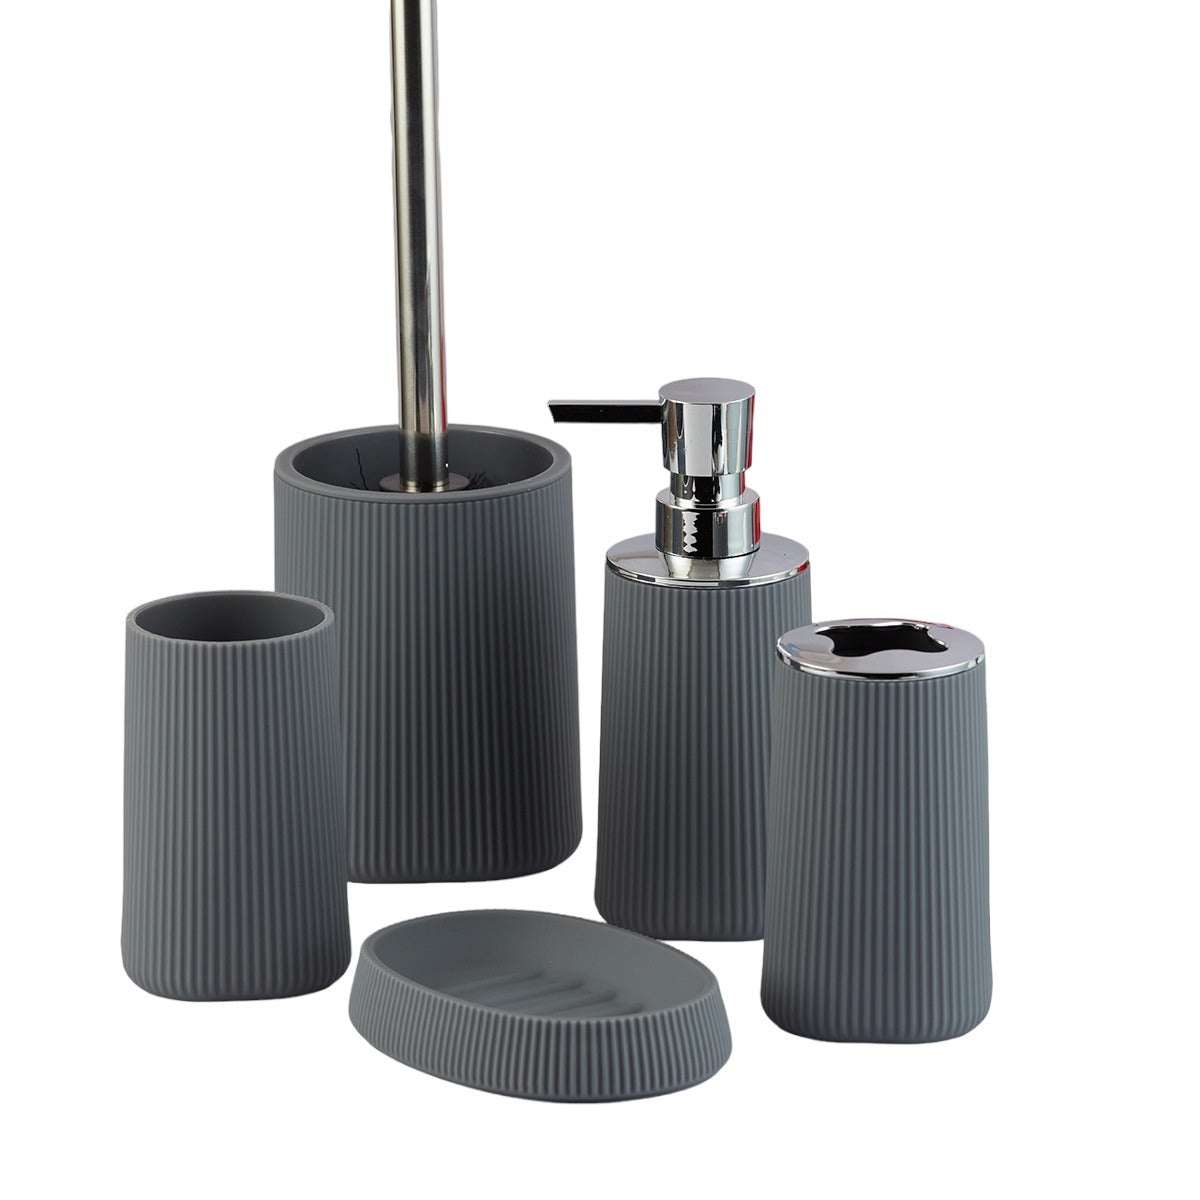 Acrylic Bathroom Accessories Set of 5 Bath Set with Soap Dispenser (10033)